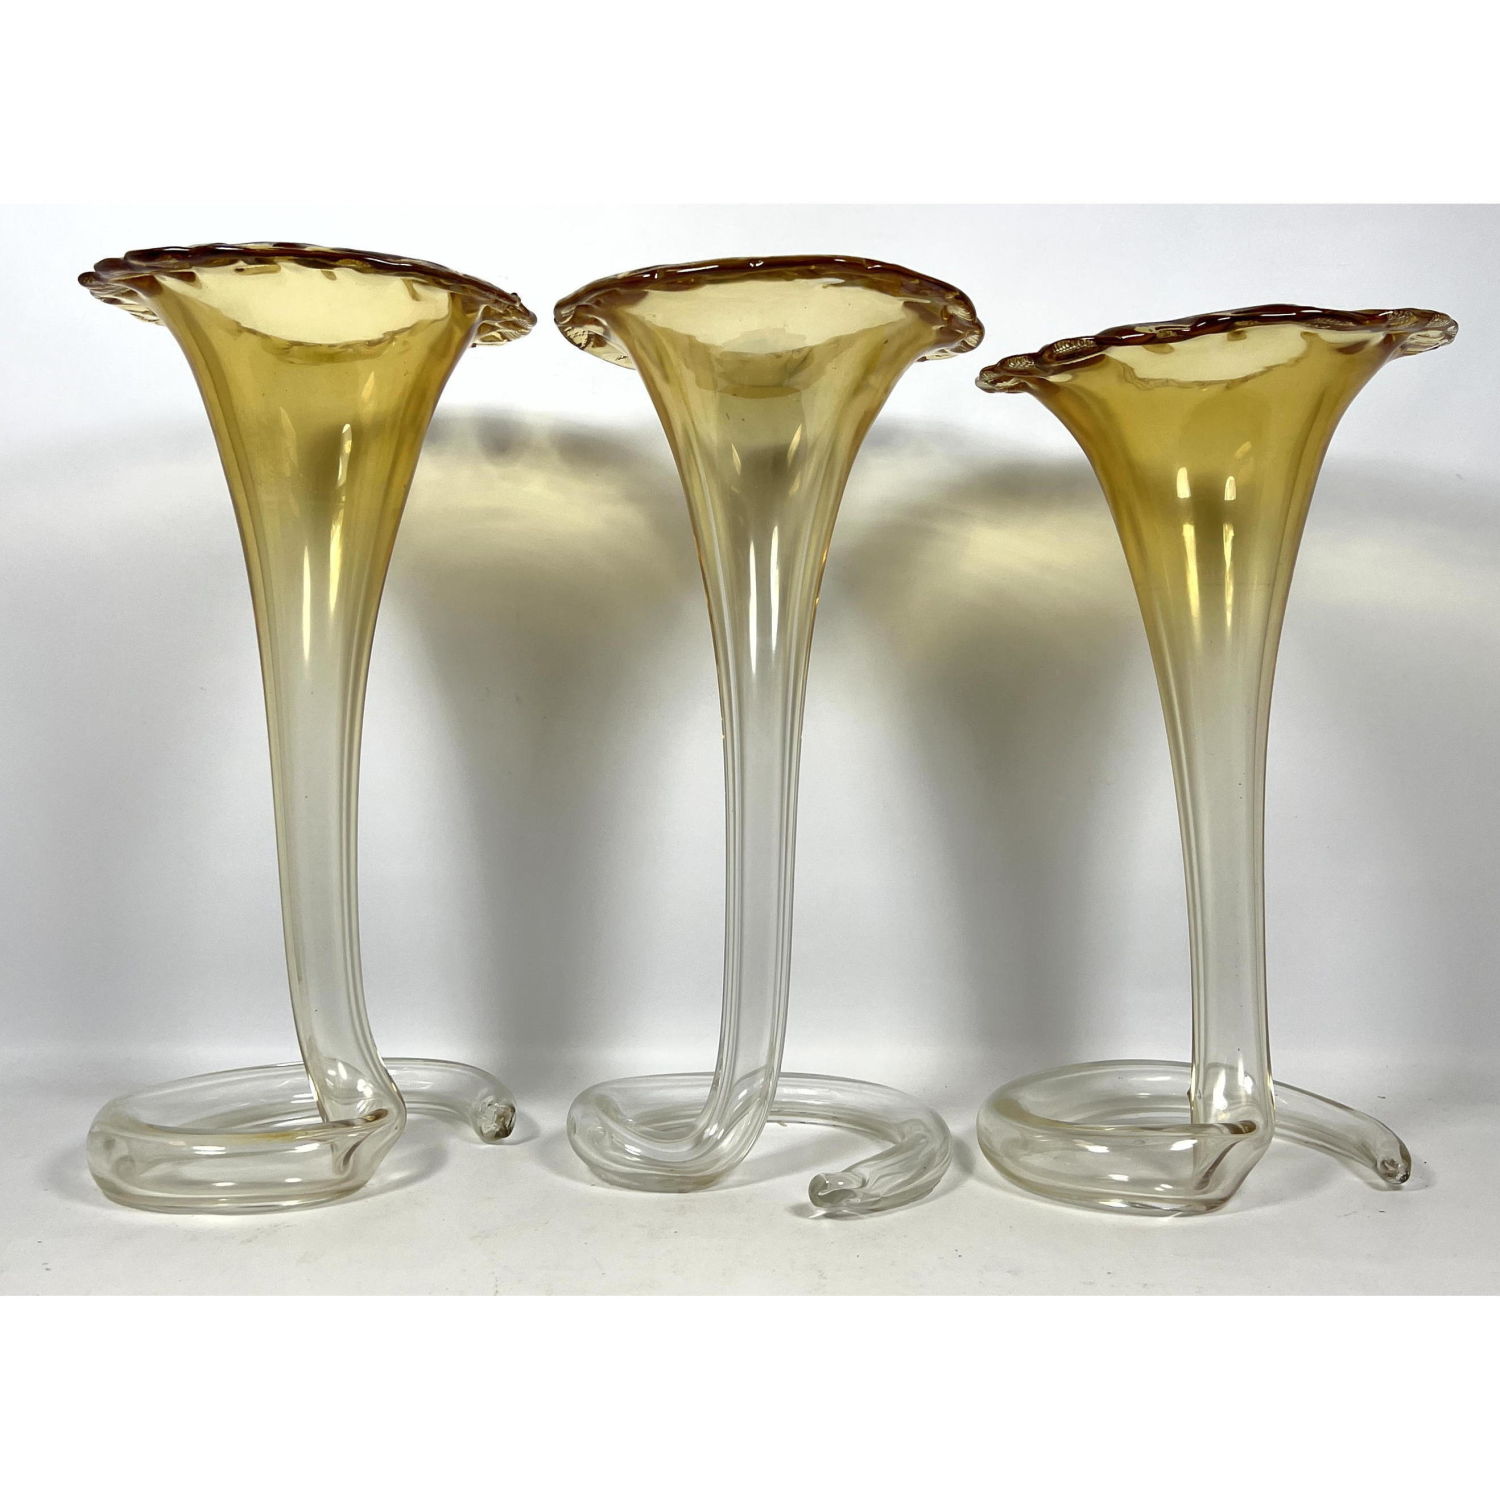 3pc Tall Art Glass Trumpet form Vases.